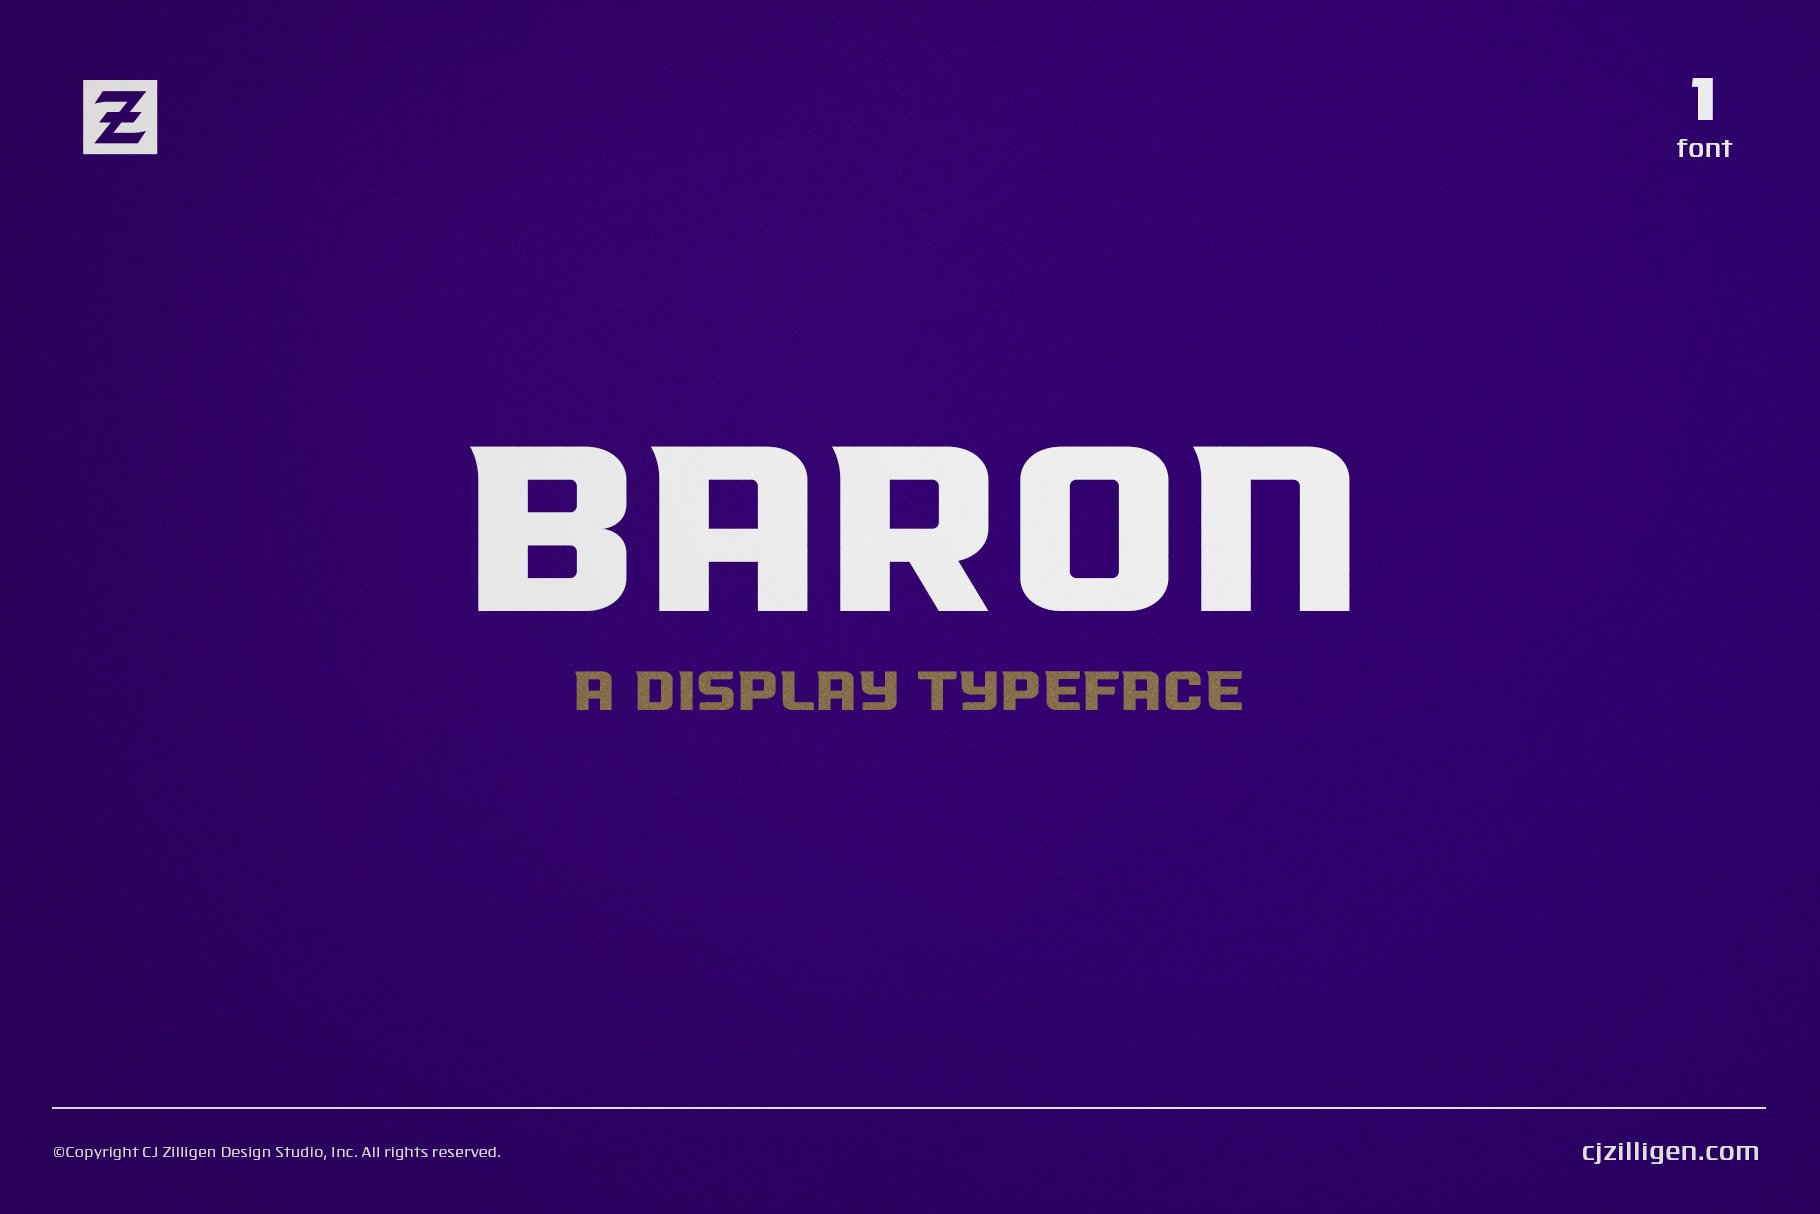 Baron cover image.